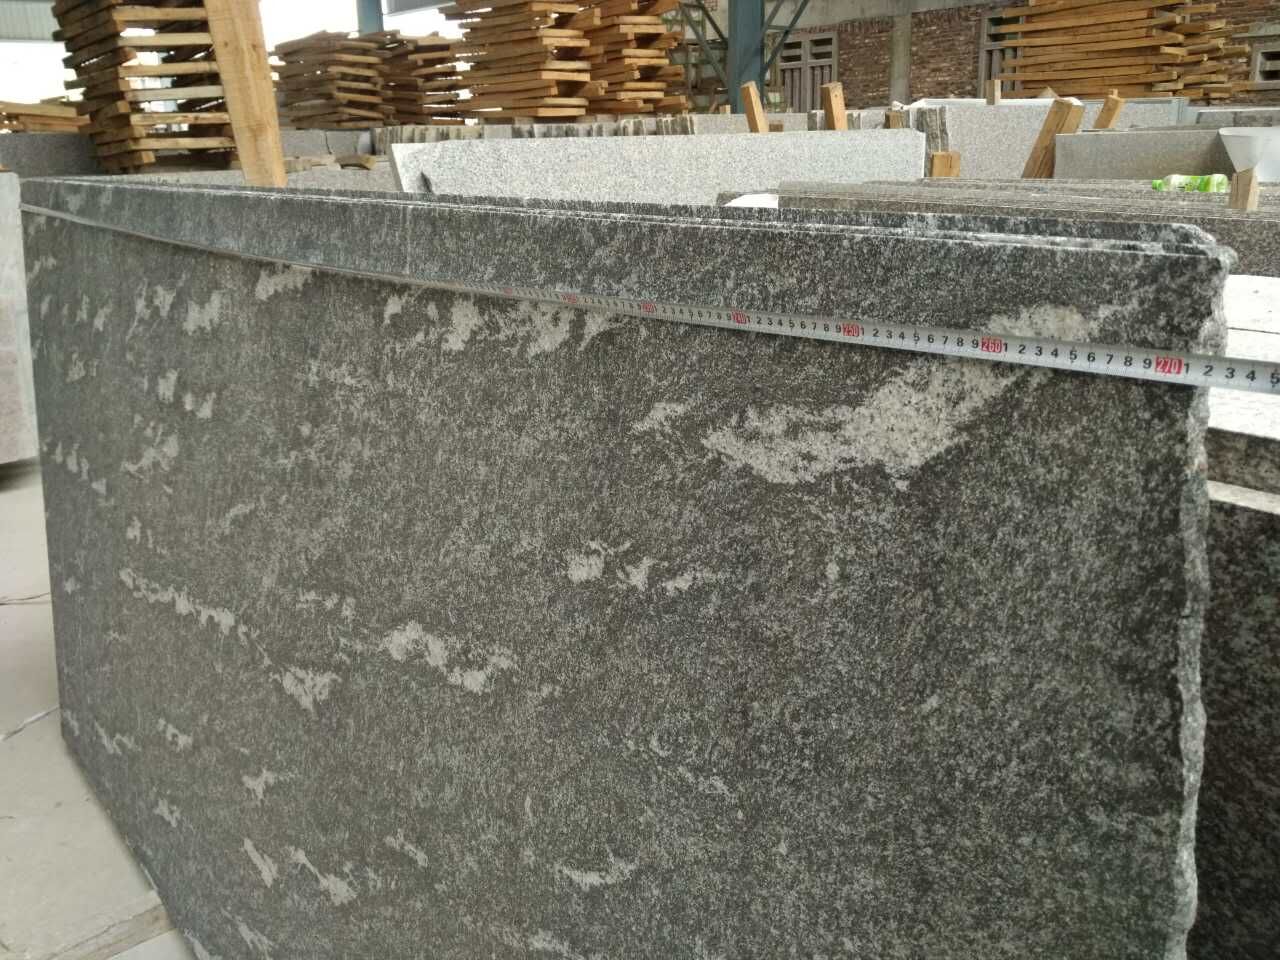 Snow grey granite slabs custormized size granite